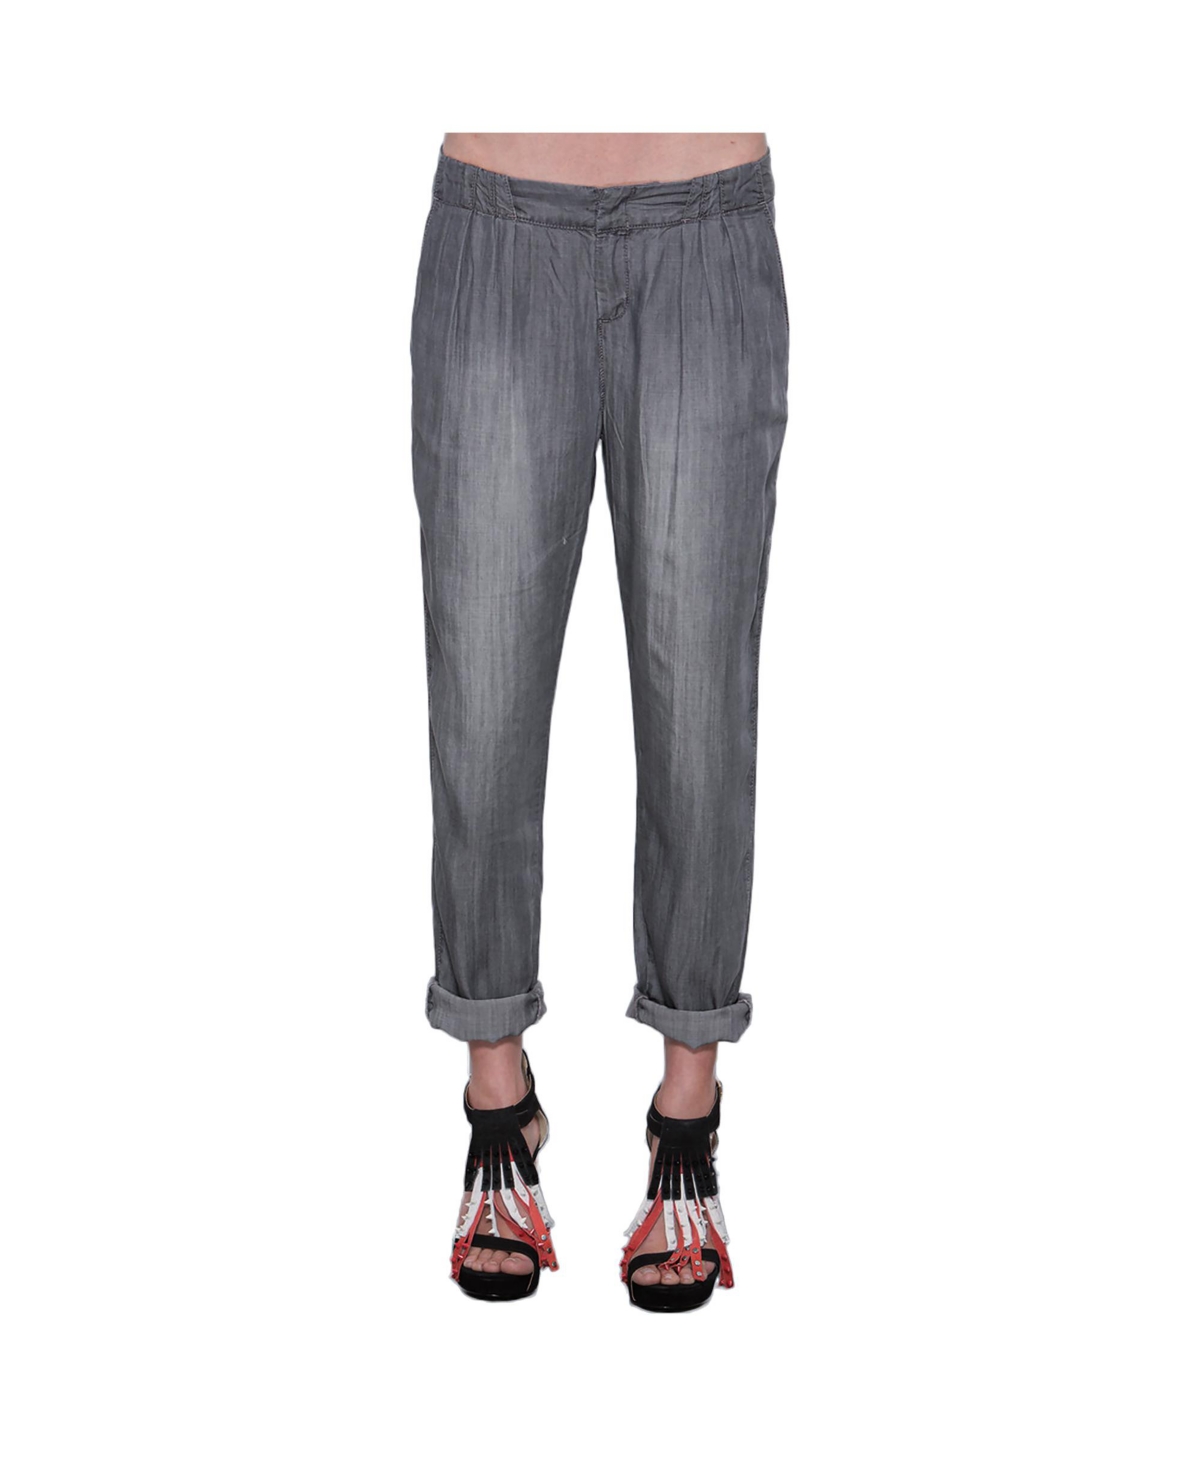 Women's Tencel Light Wash Front Pleated Pants - Medium grey